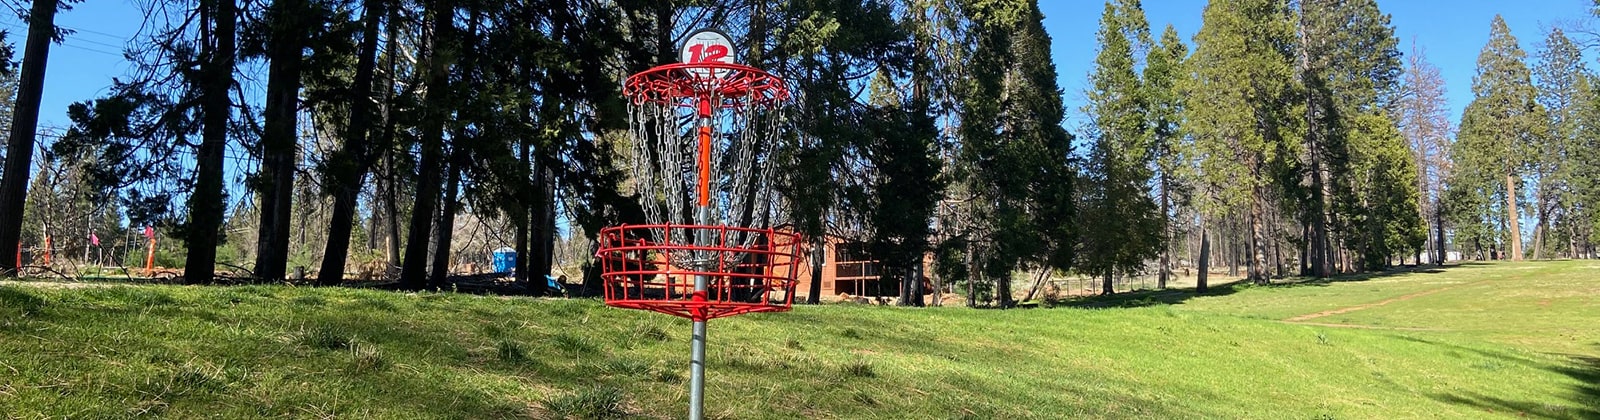 Disc Golf Course at Schifilliti Park